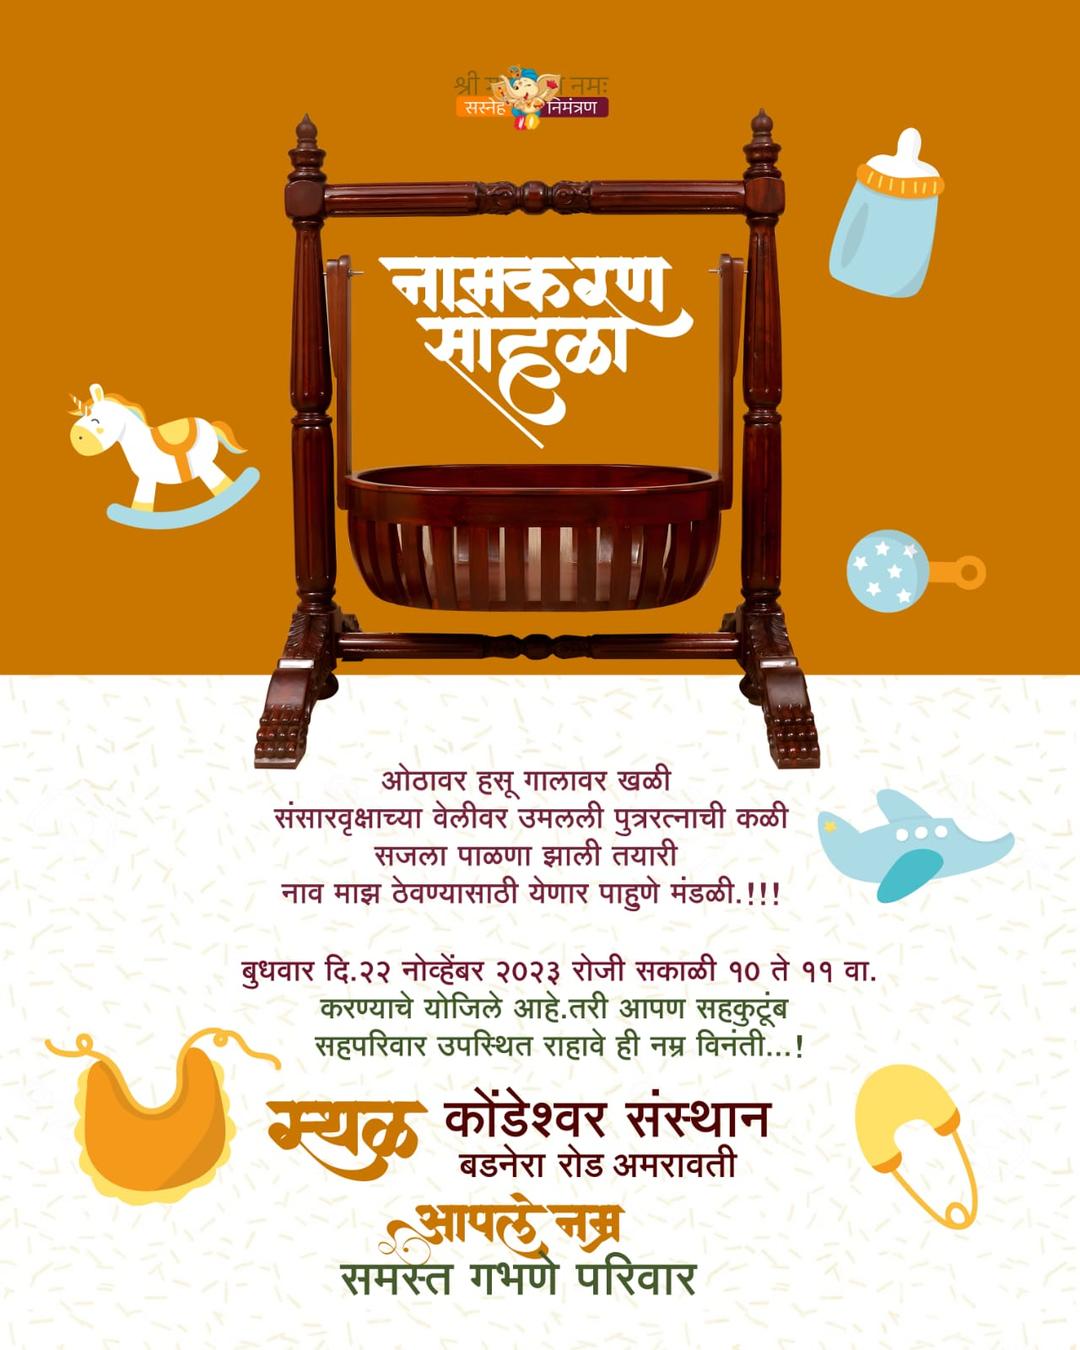 Namkaran Sohala Invitation Card In Marathi